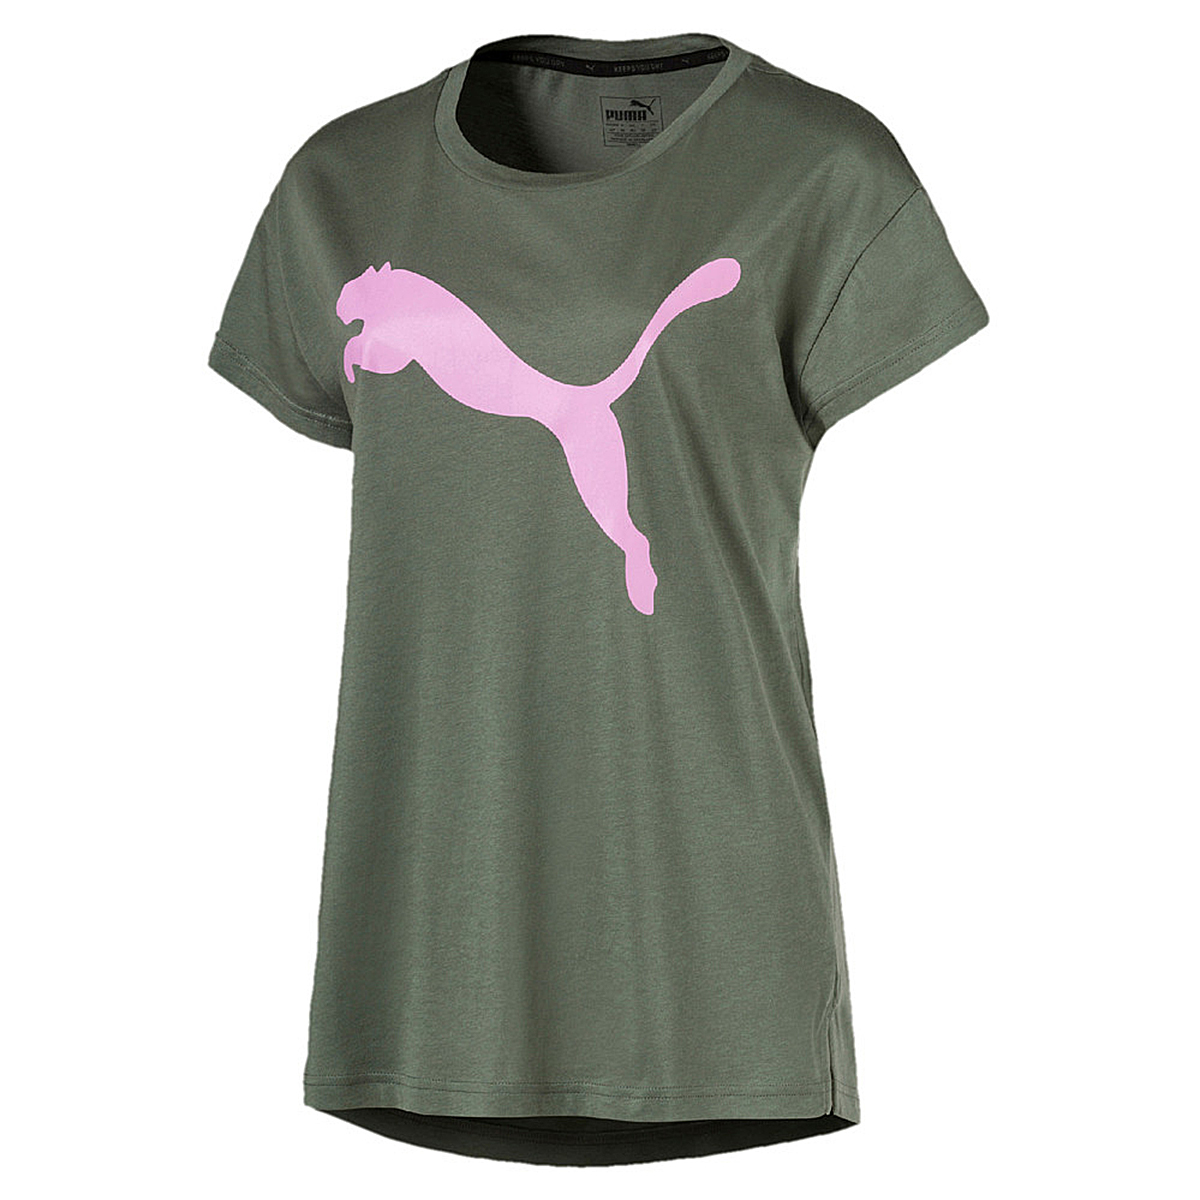 PUMA Damen Active Logo Tee DryCell T-Shirt grün 852006